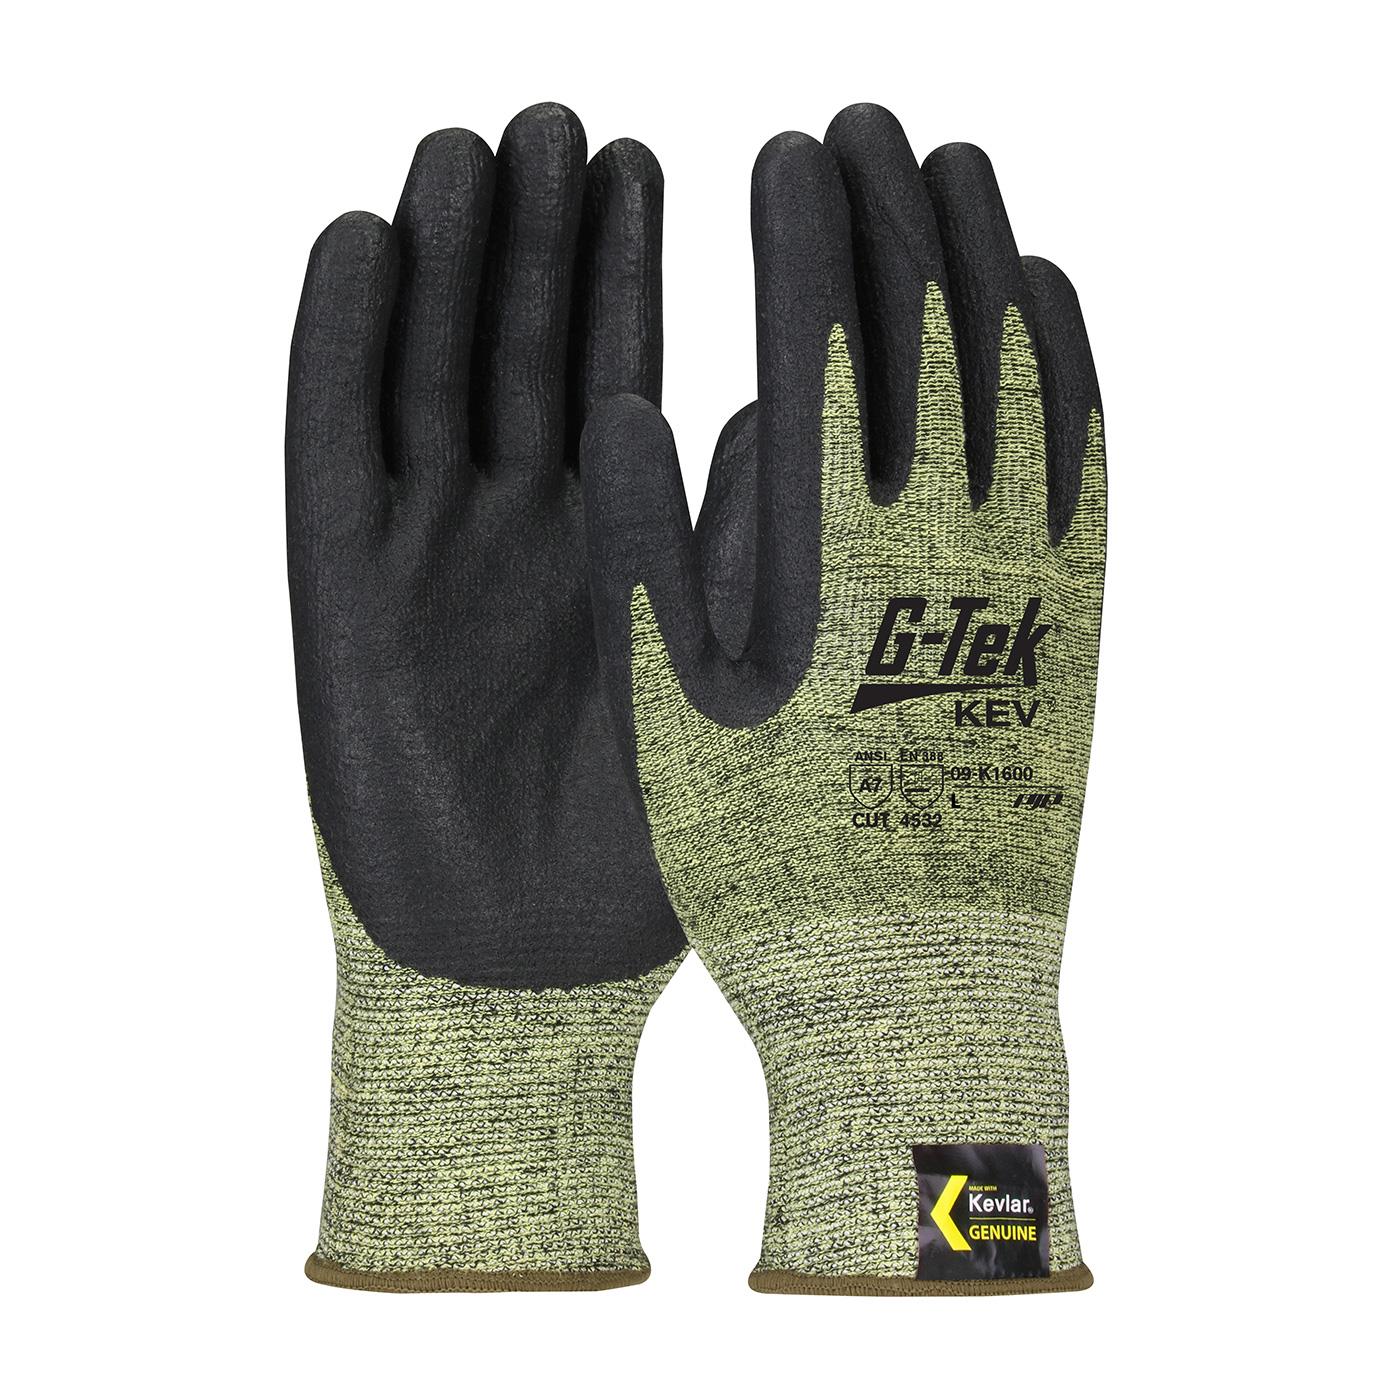 G-TEK KEV A7 FOAM NITRILE PALM COATED - Cut Resistant Gloves